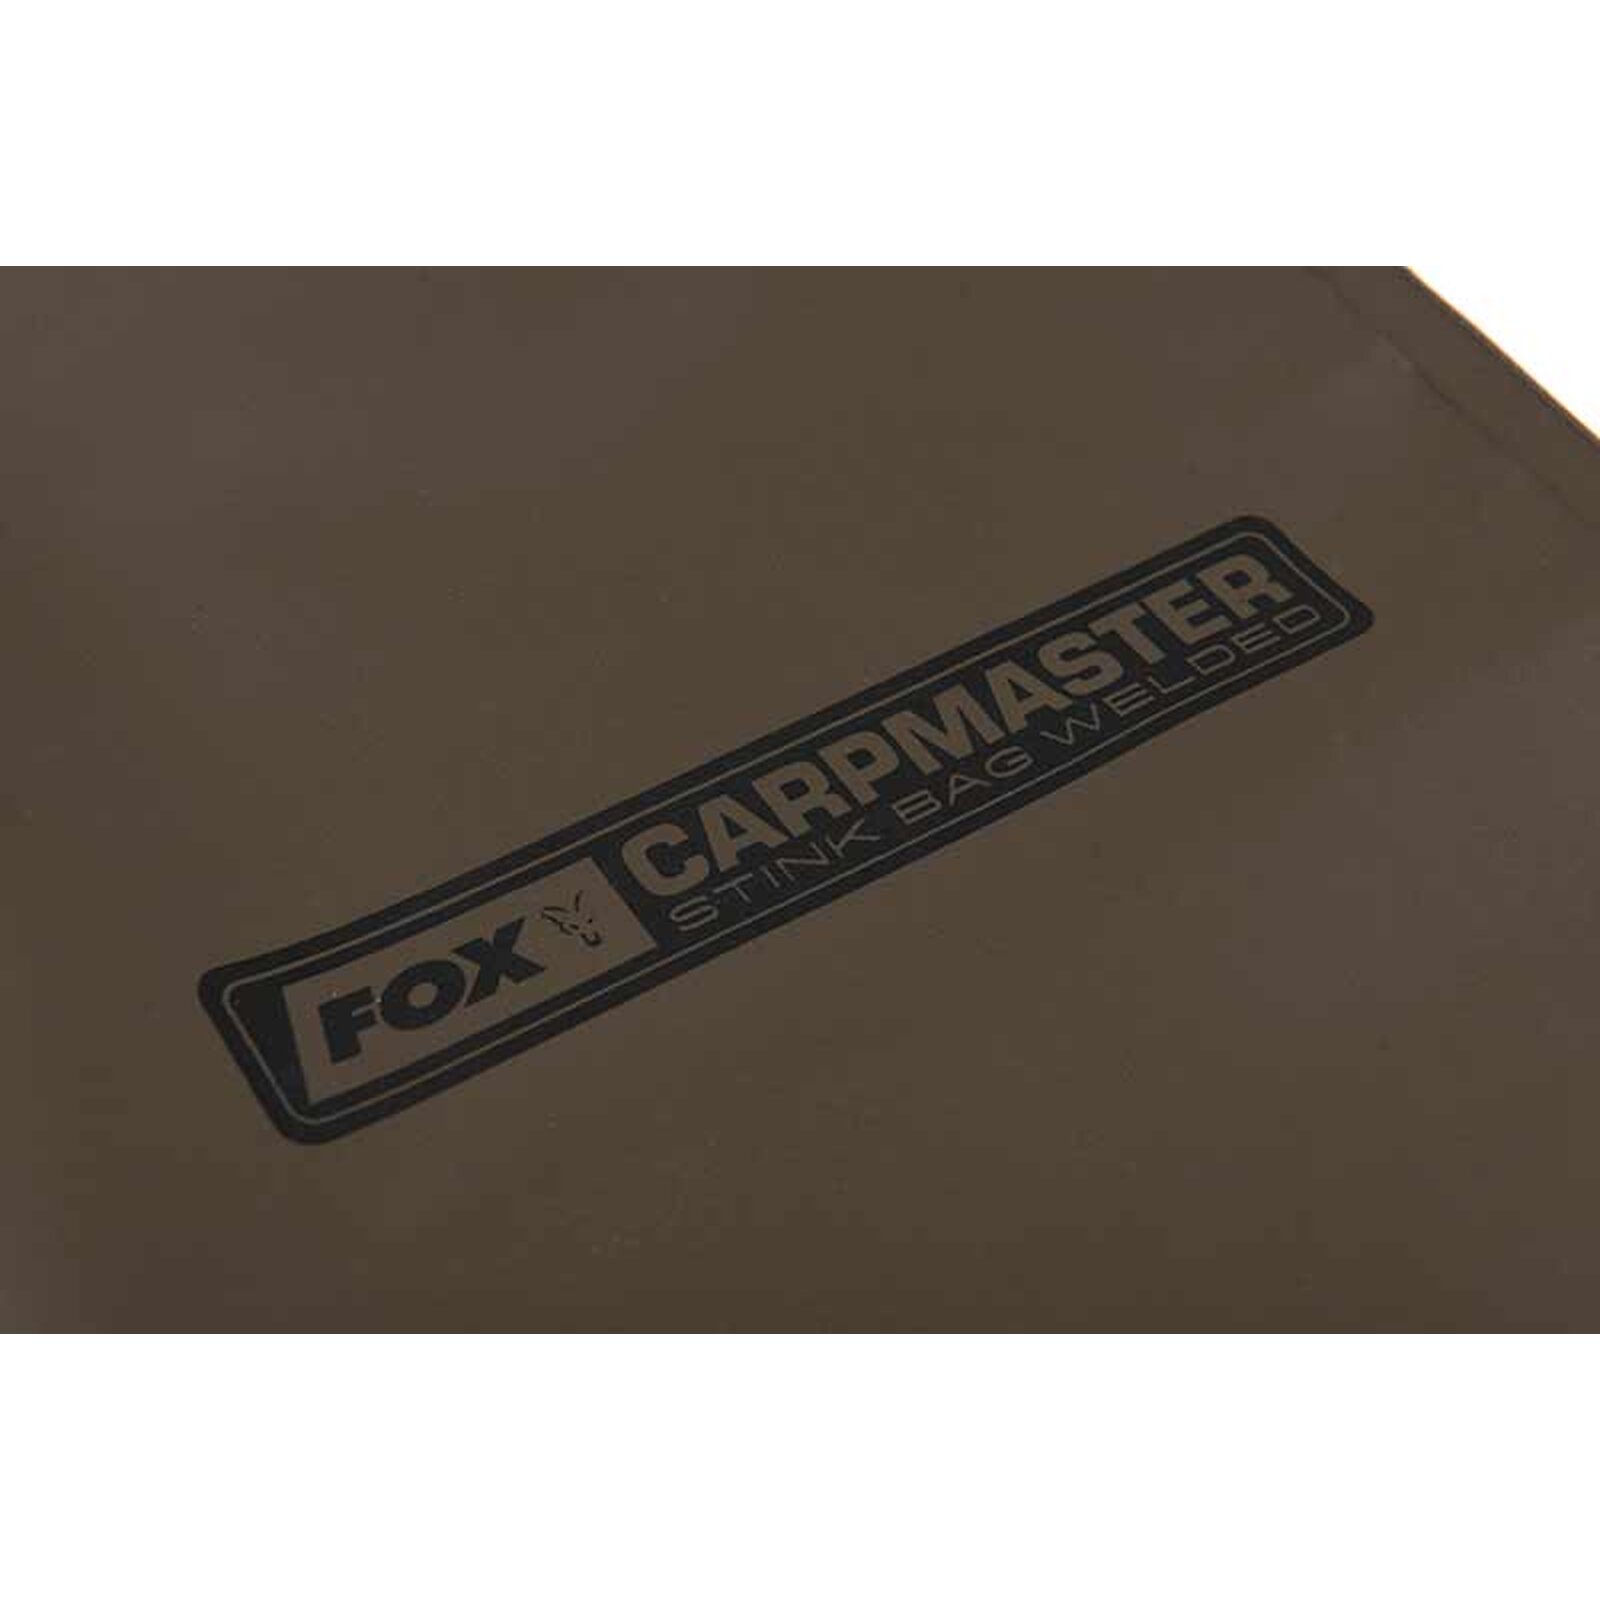 FOX Carpmaster Welded XL Stink Bag